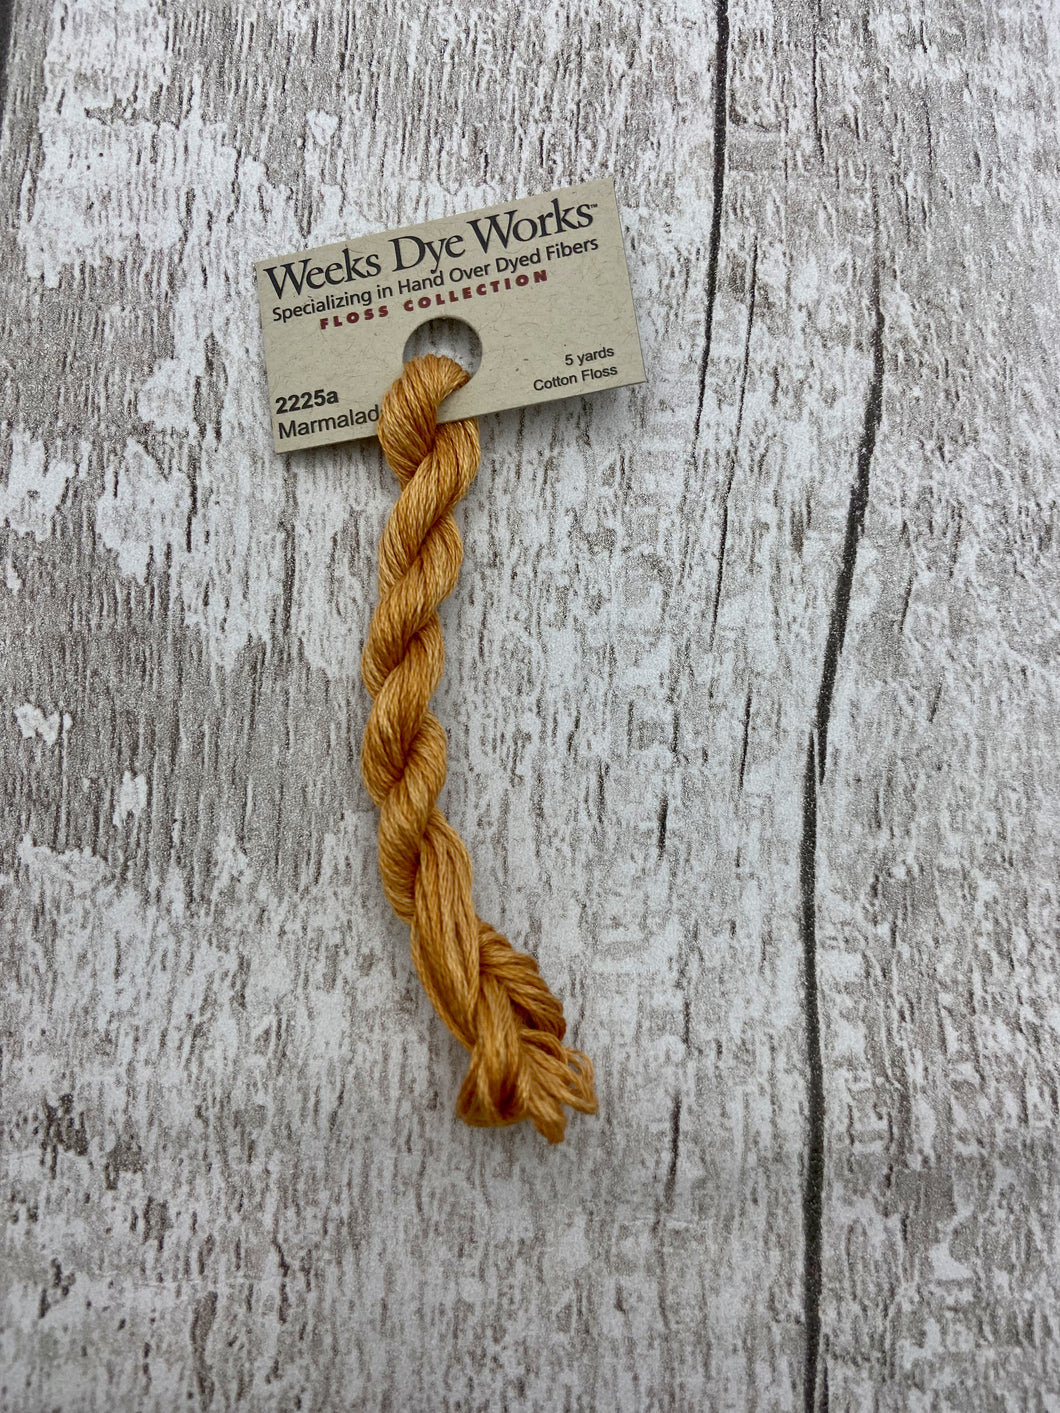 Marmalade (#2225a) Weeks Dye Works 6-strand cotton floss